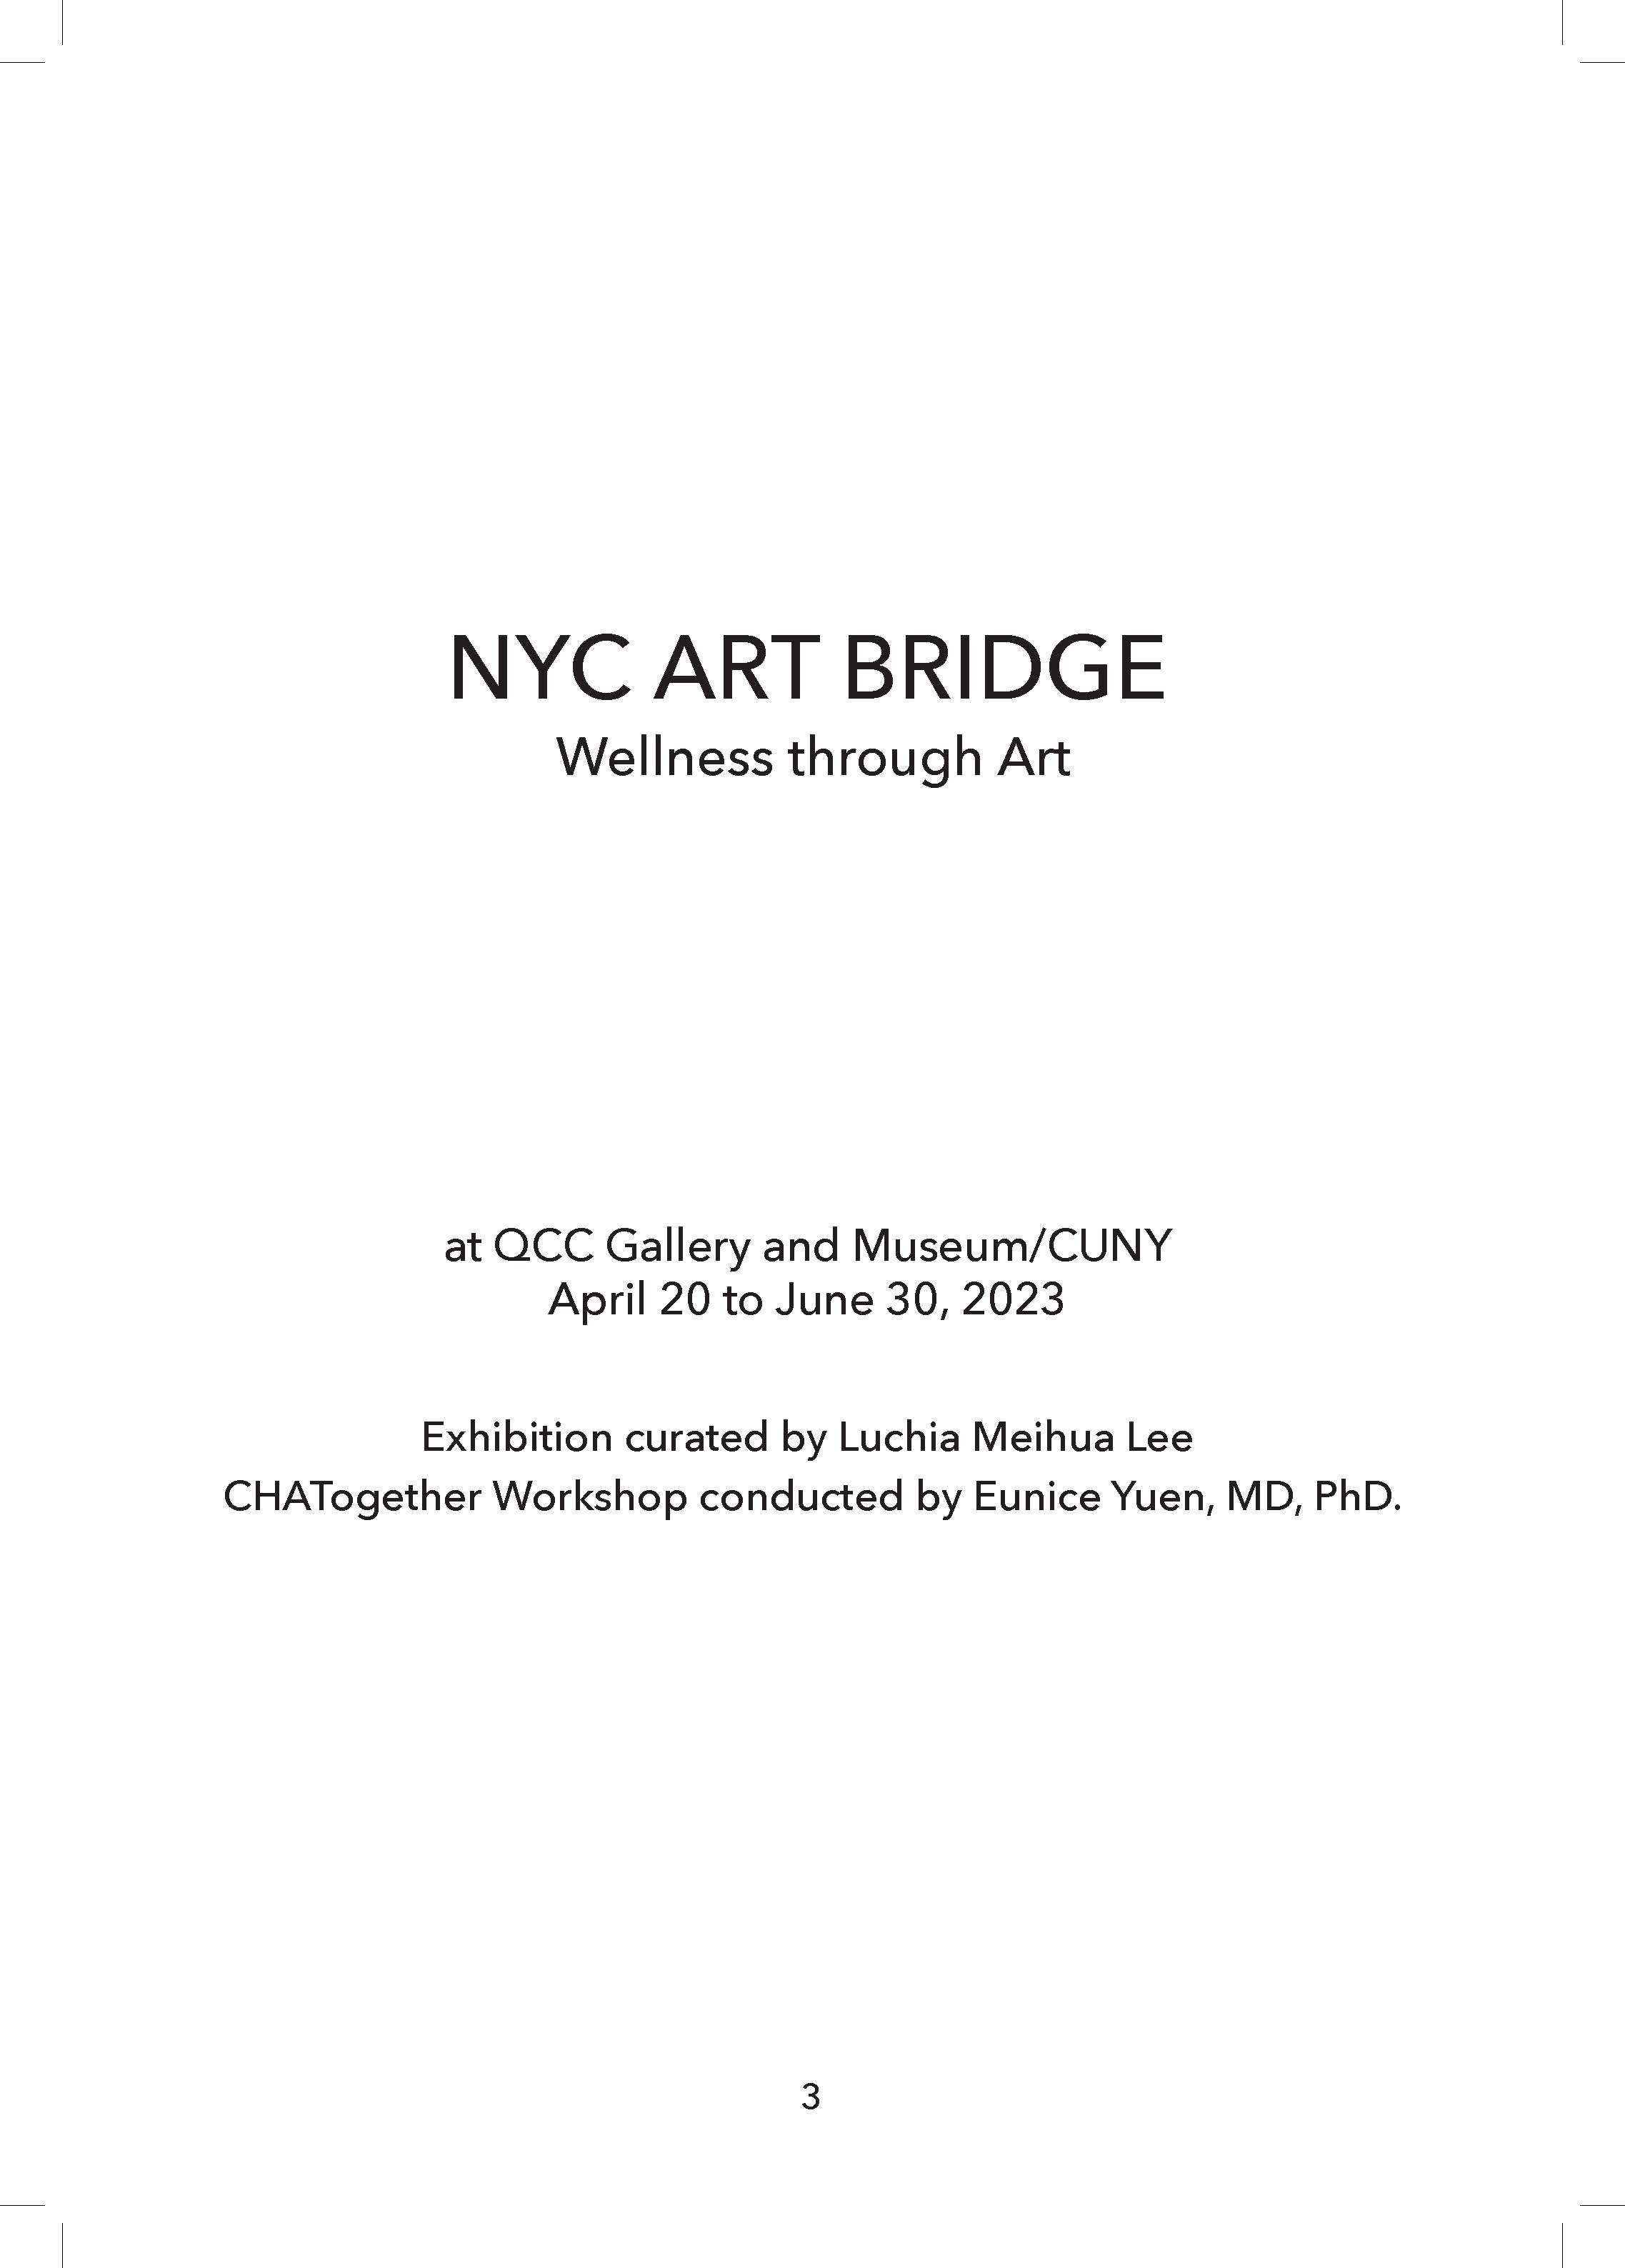 Booklet from Printer-NYC Art Bridge Wellness Through Art_Page_03.jpg